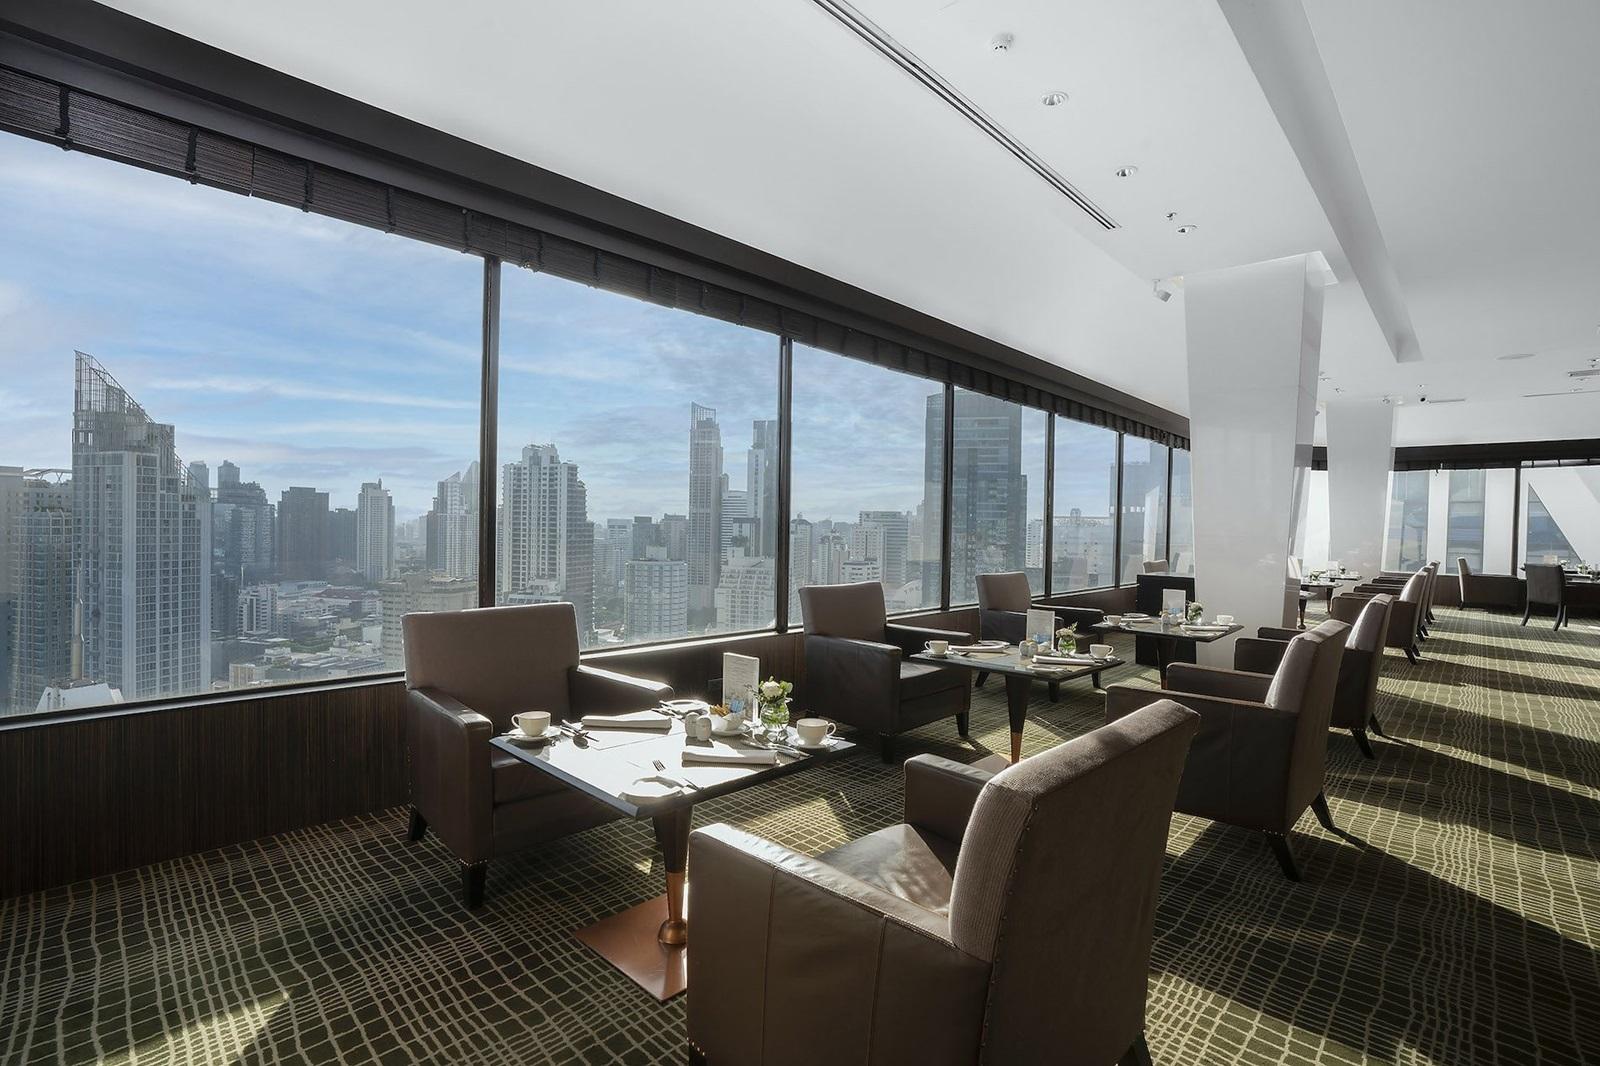 The Landmark Bangkok Hotel Executive Club Lounge